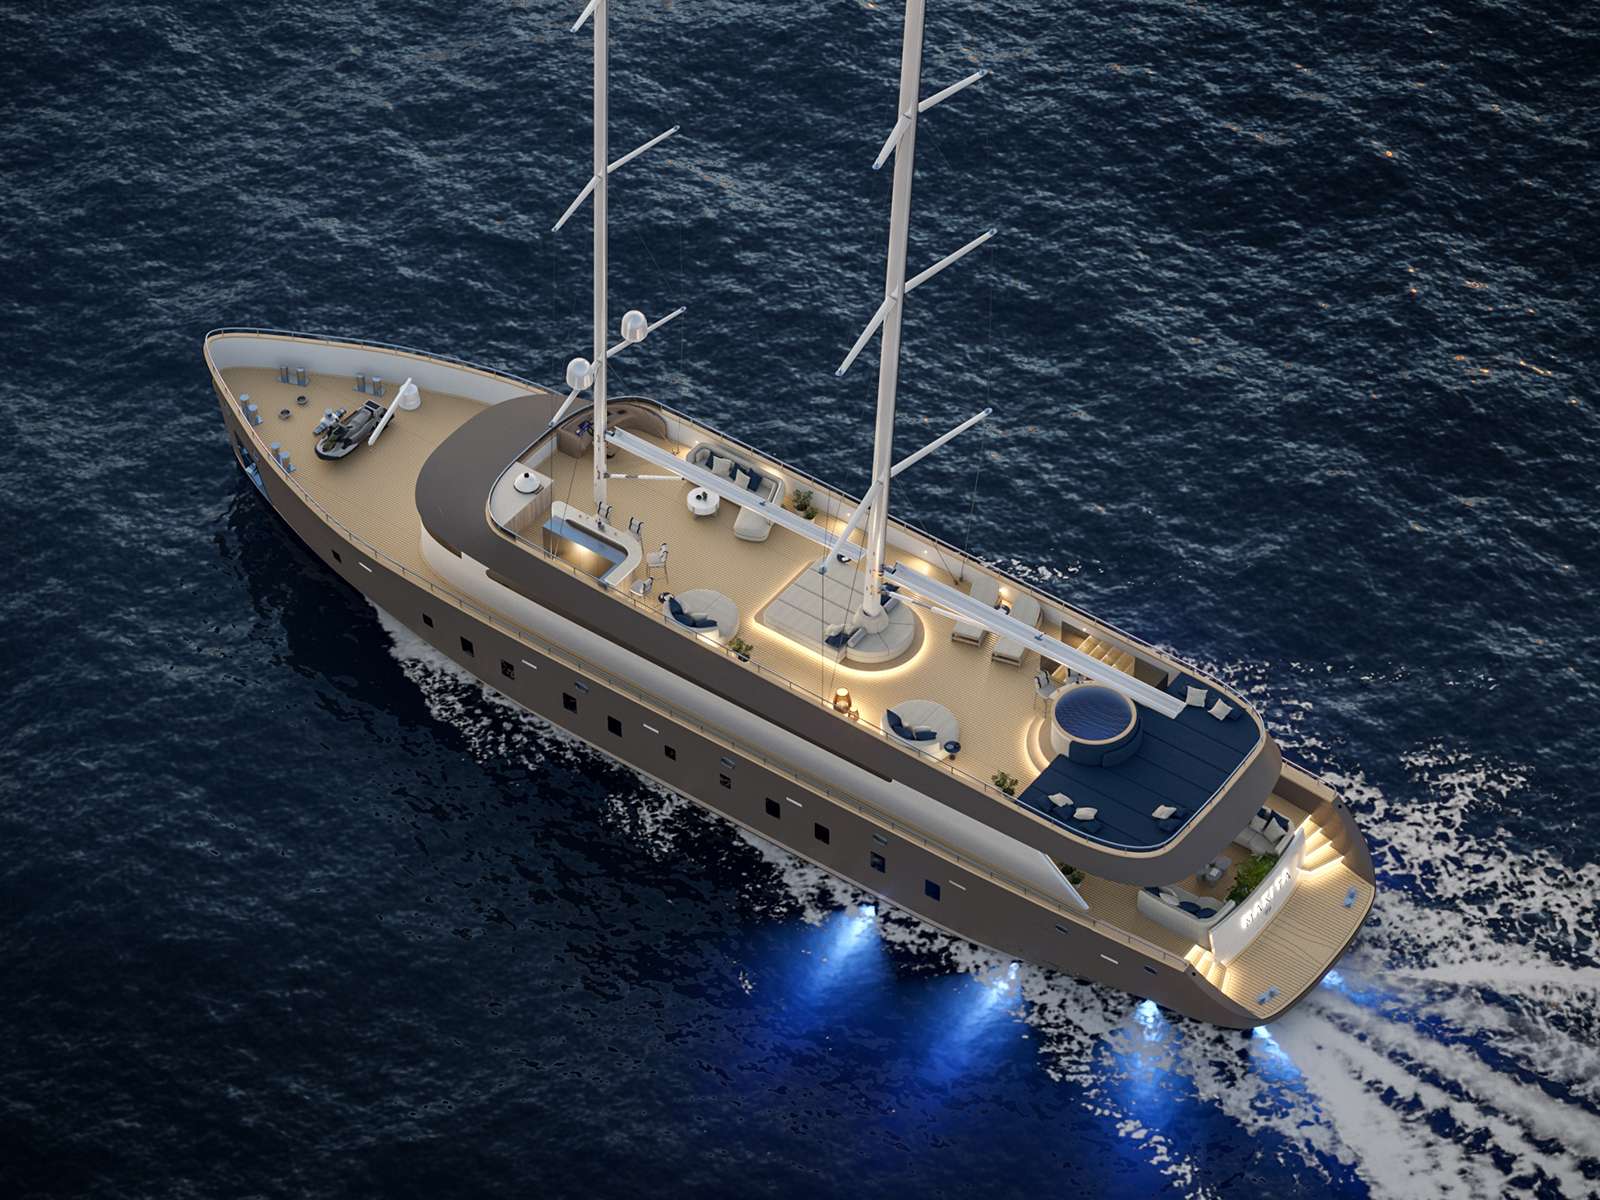 Maxita - Superyacht charter worldwide & Boat hire in Croatia 4